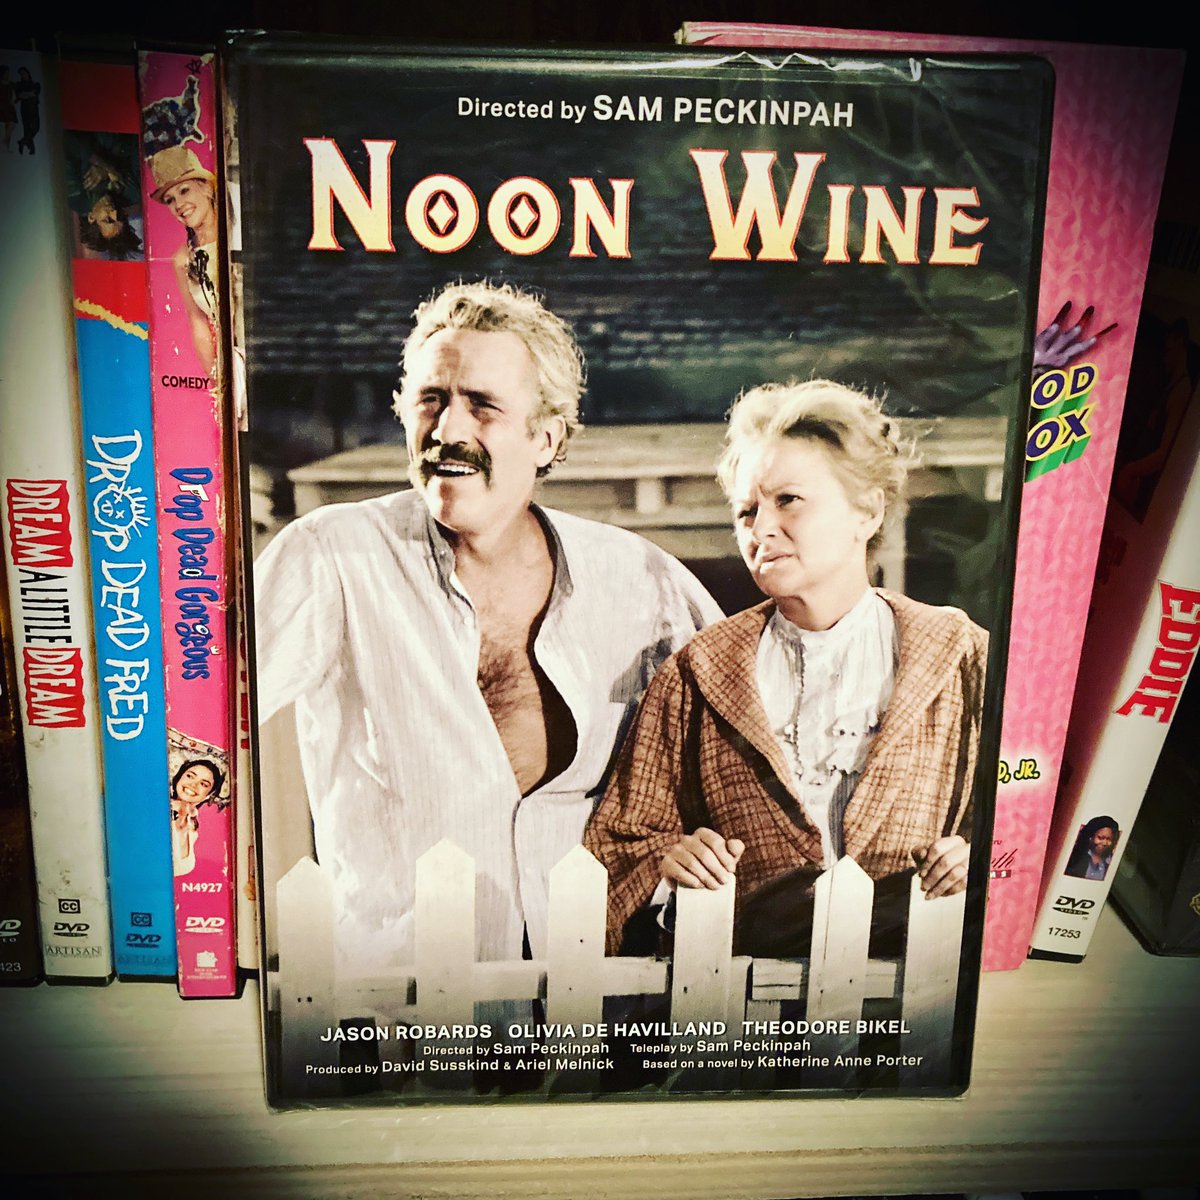 Noon Wine courtesy of @liberationhall4u. #originalbroadcast #commercialfree #dvd